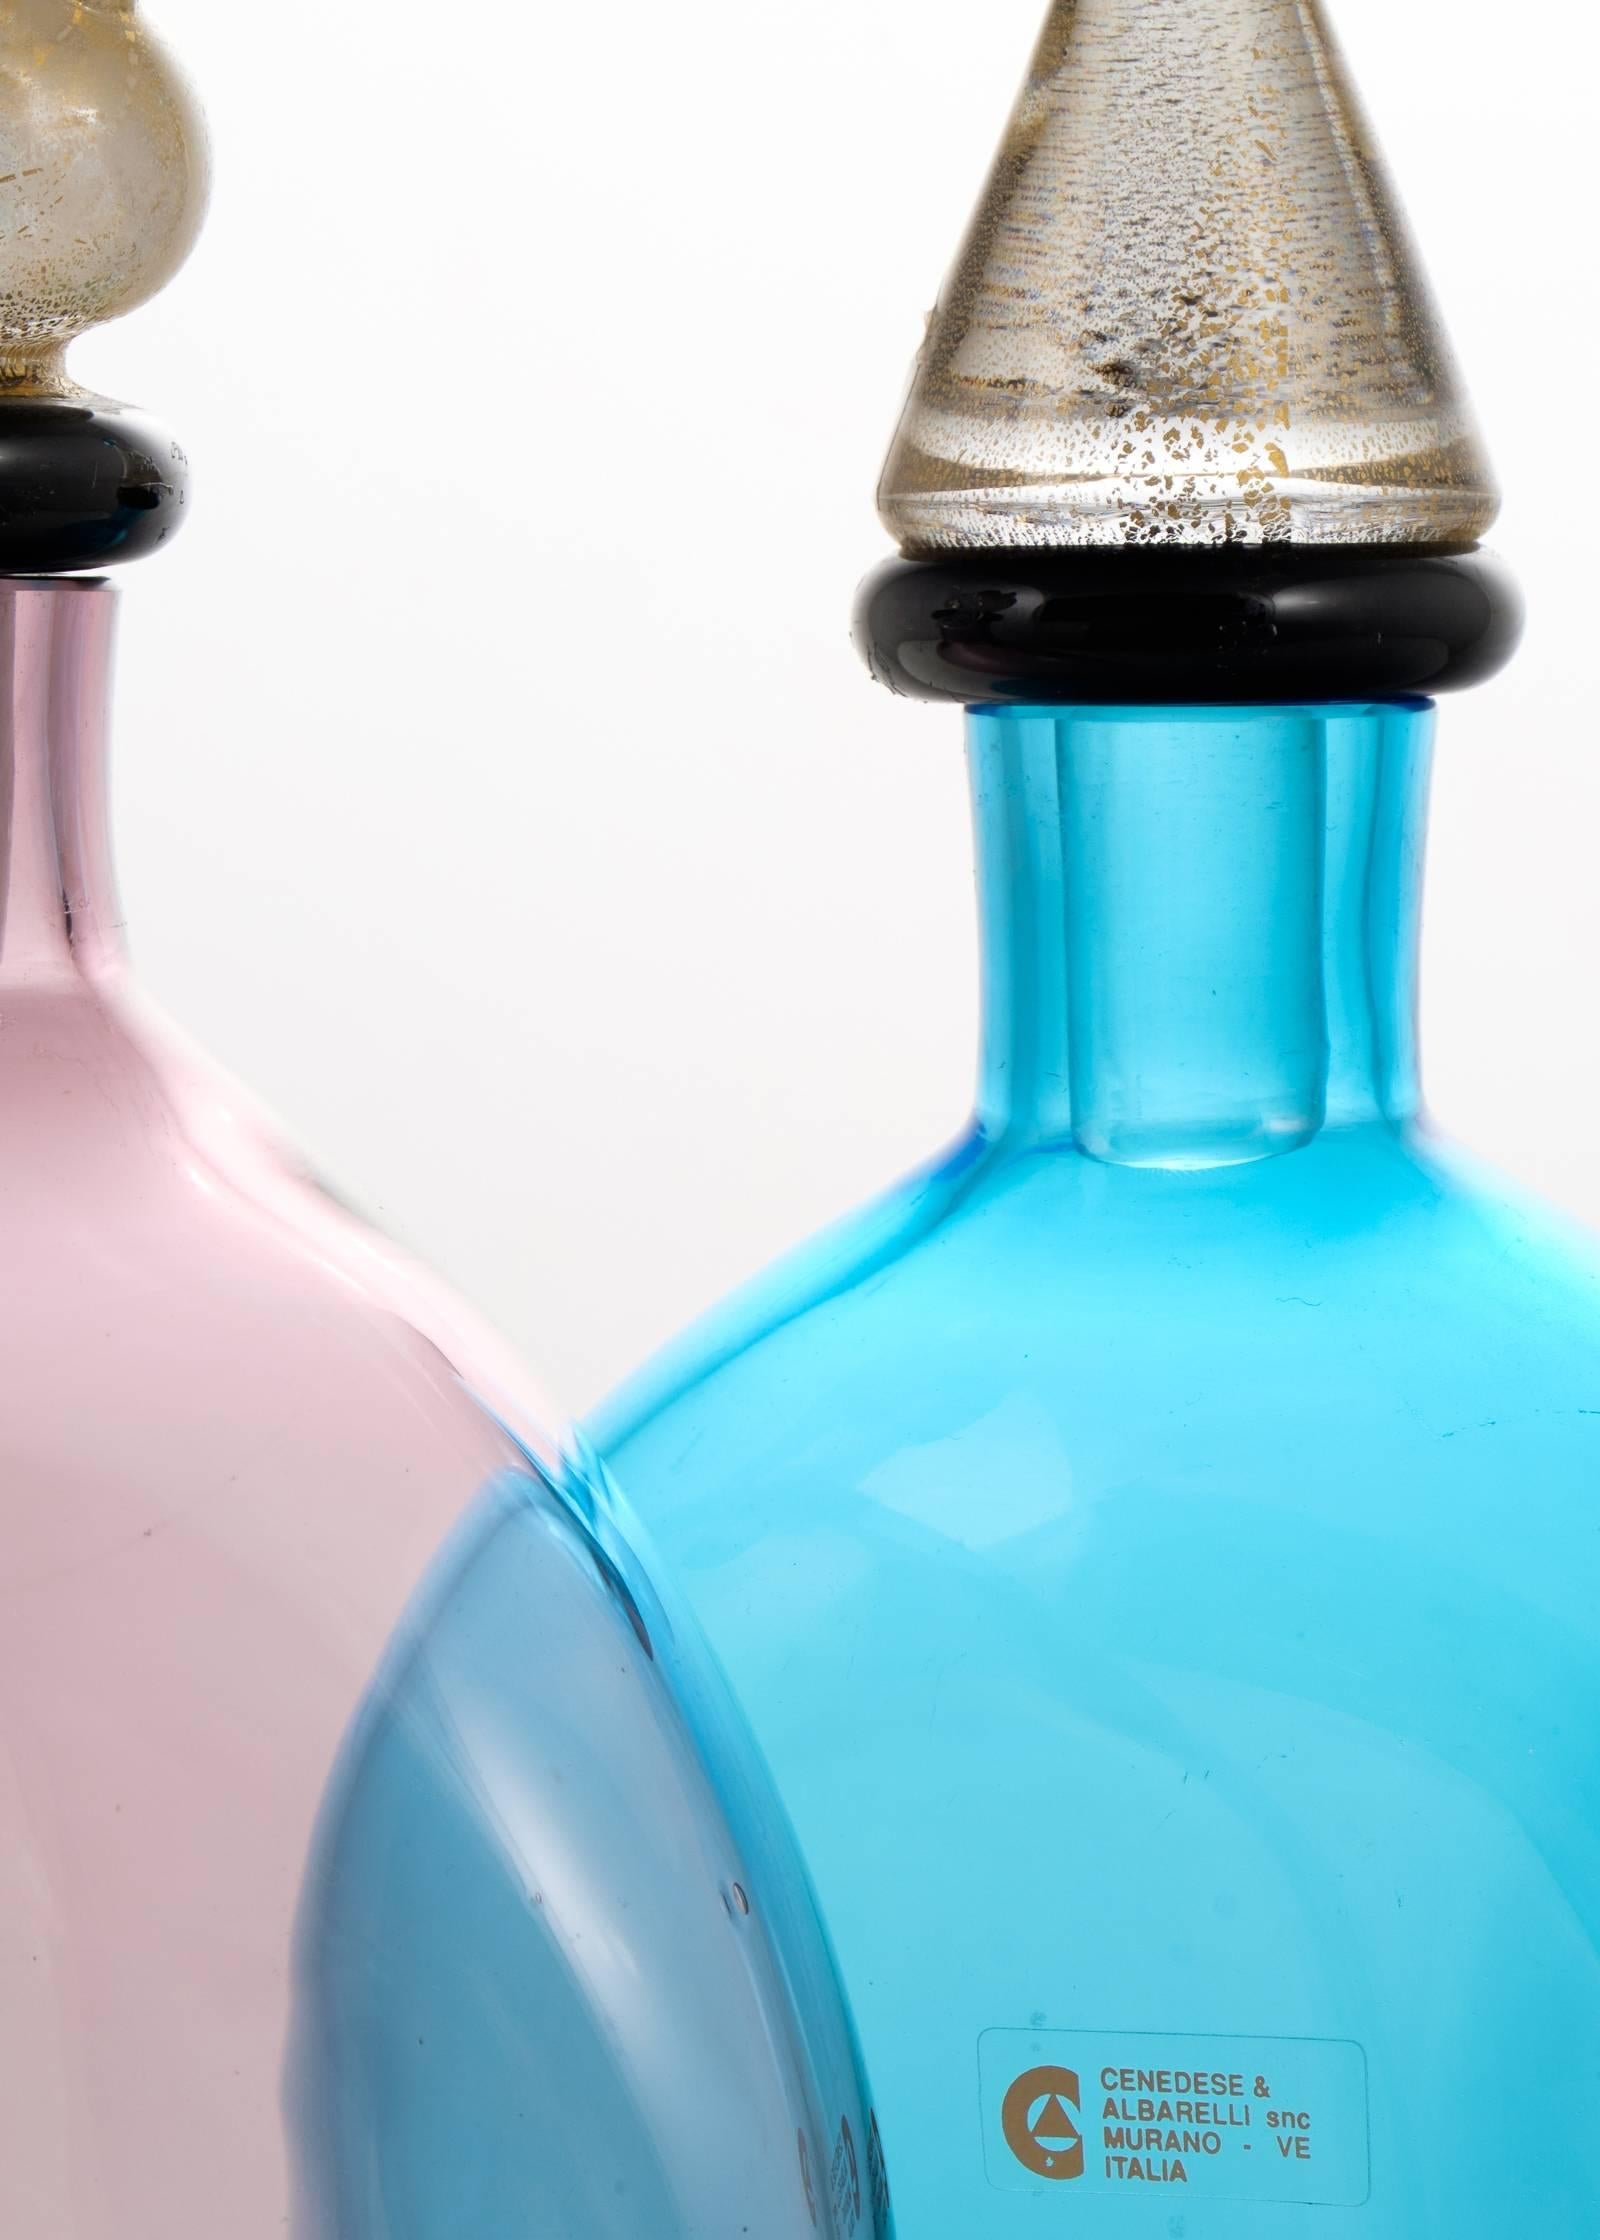 Murano-Glasflasche von Cenedese & Albarelli (Muranoglas) im Angebot